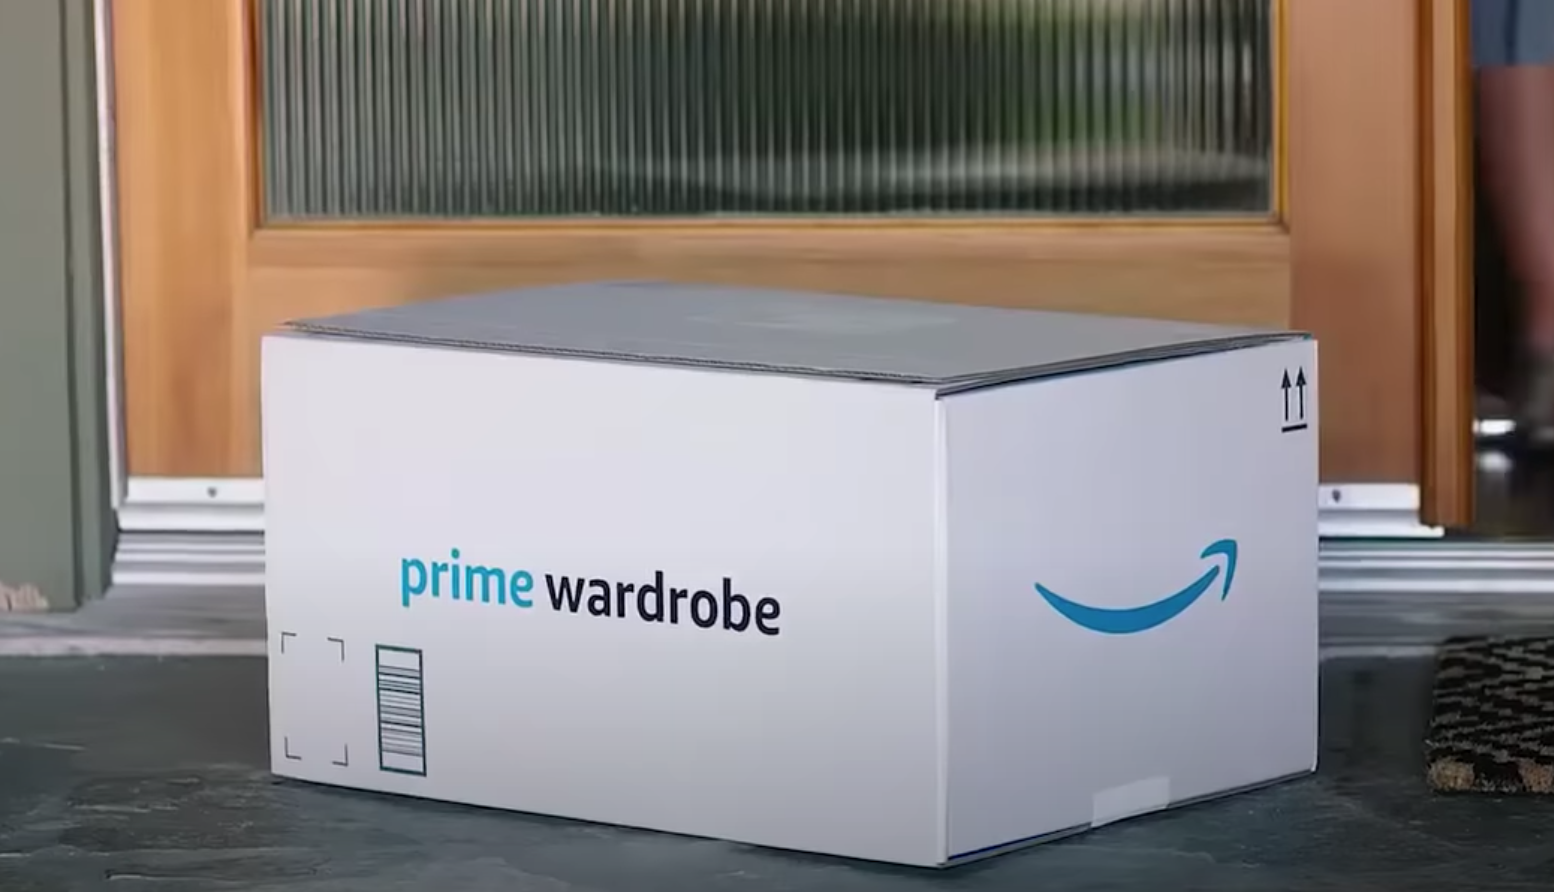 Amazon prime box with wardrobe branding